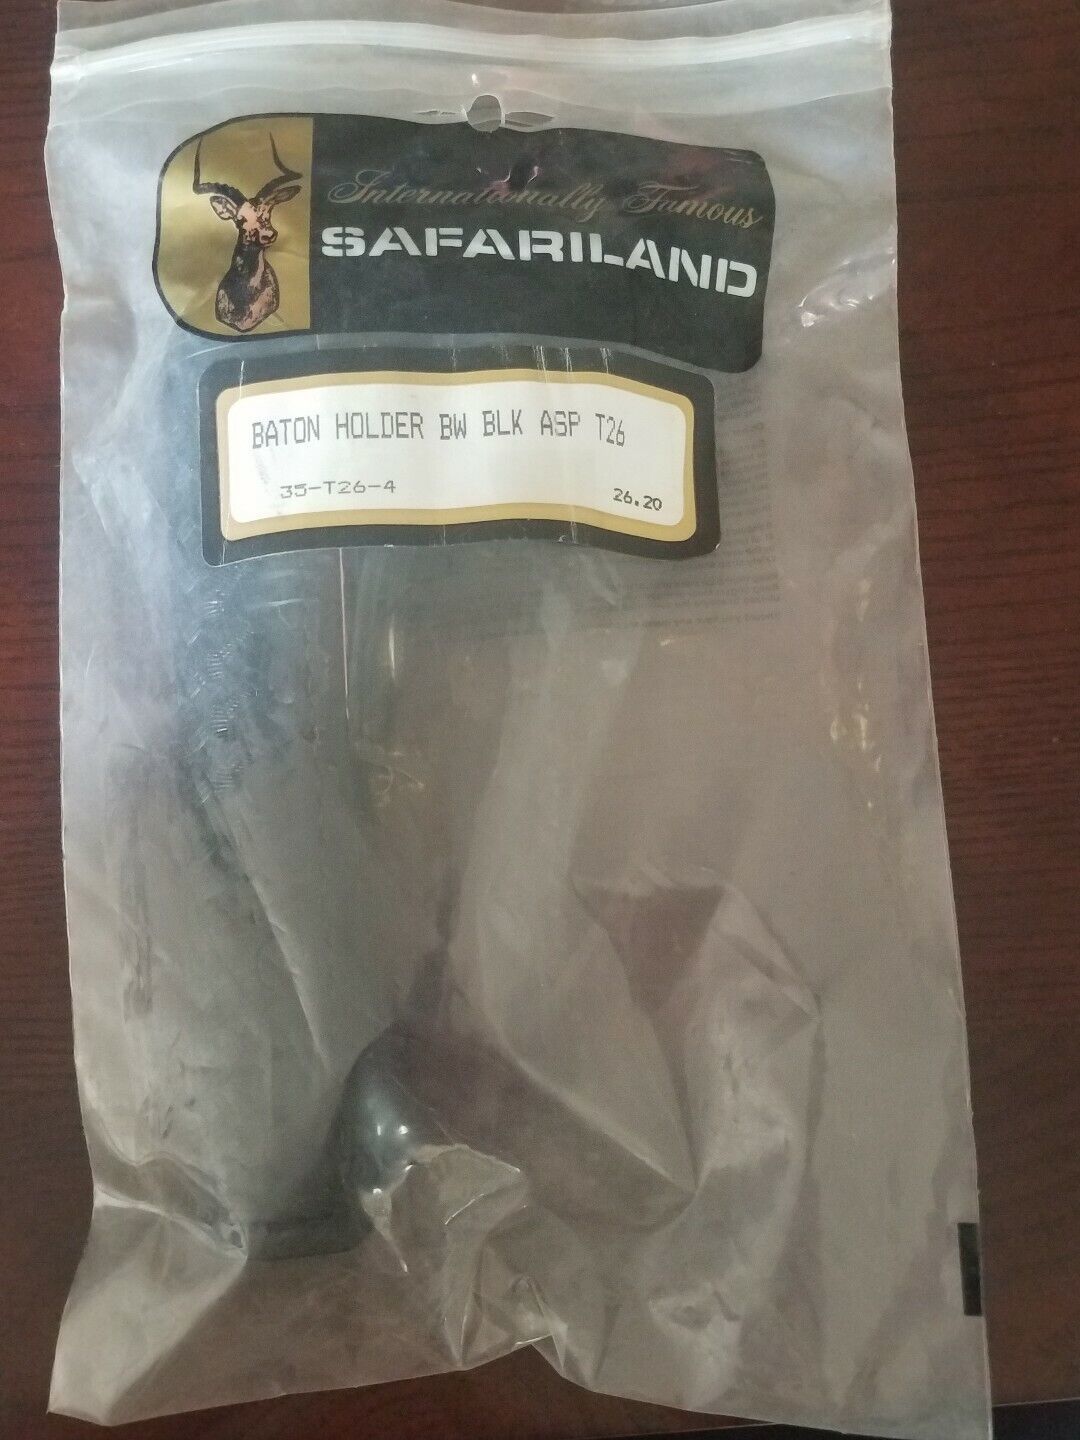 internationally famous safariland Baton Holder BW BLK ASP T26 Hunting-NEW-SHIP24 - $59.28